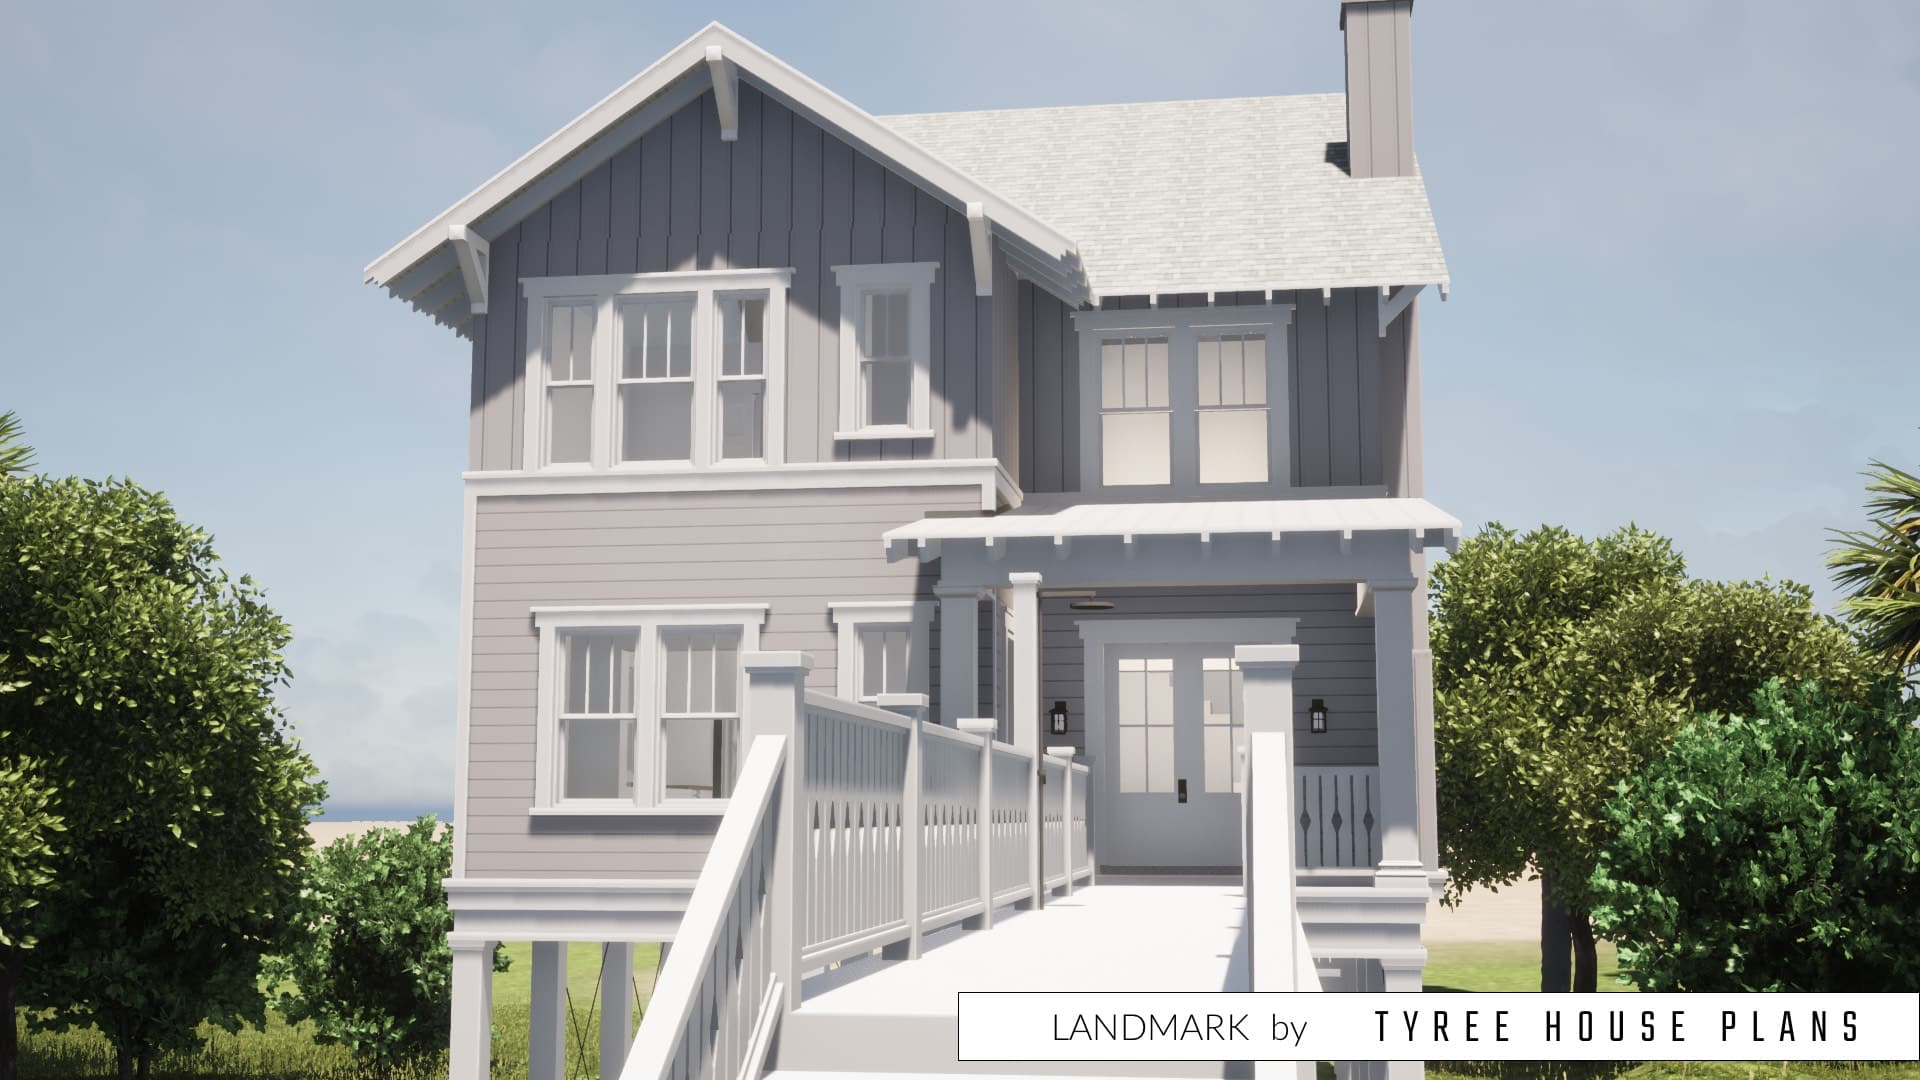 Landmark House Plan by Tyree House Plans